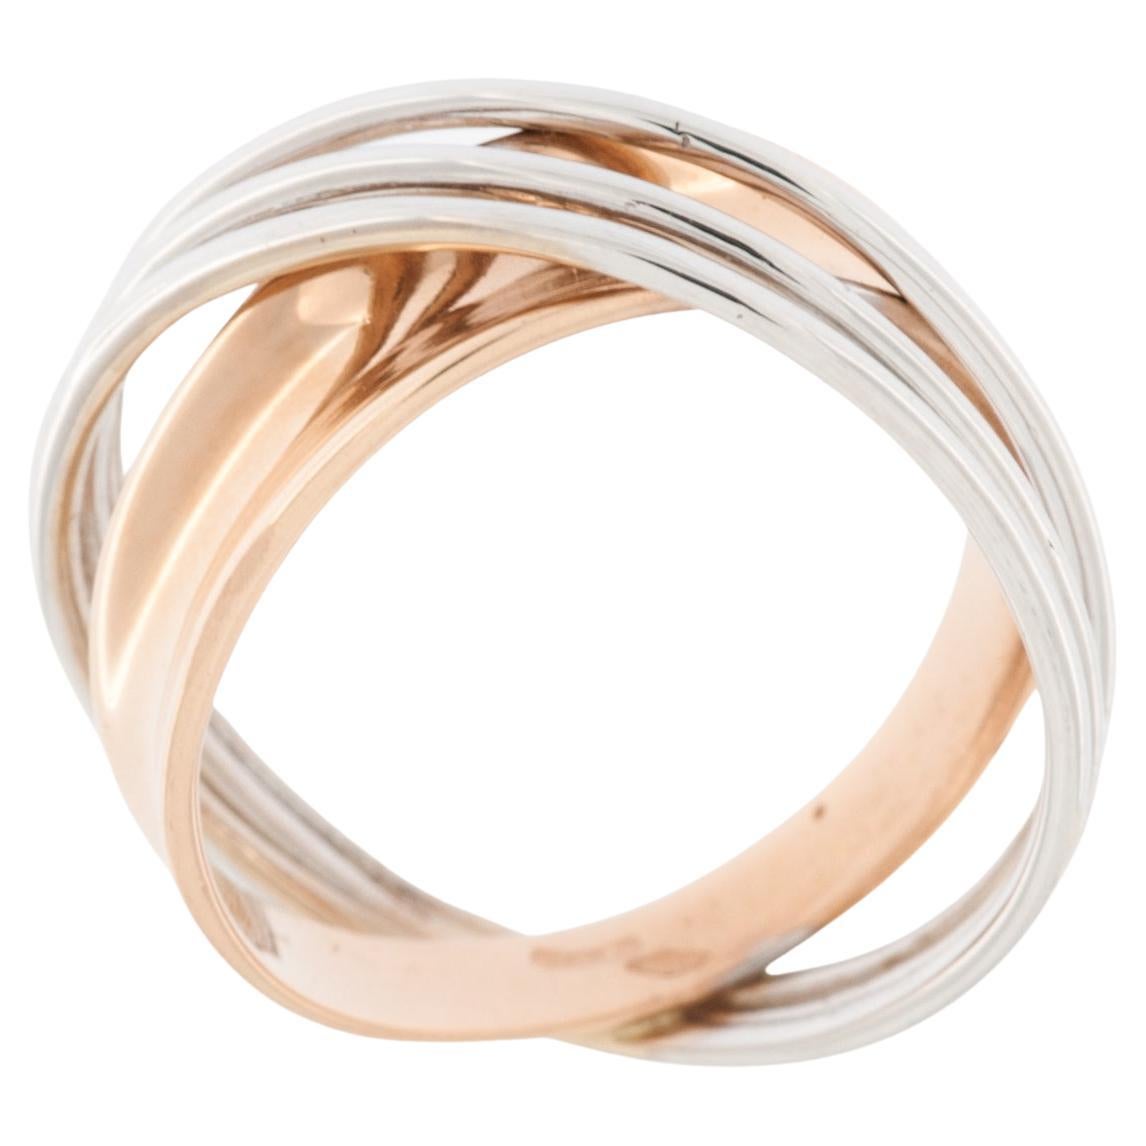 Italian Modern 18kt White and Rose Gold Ring For Sale